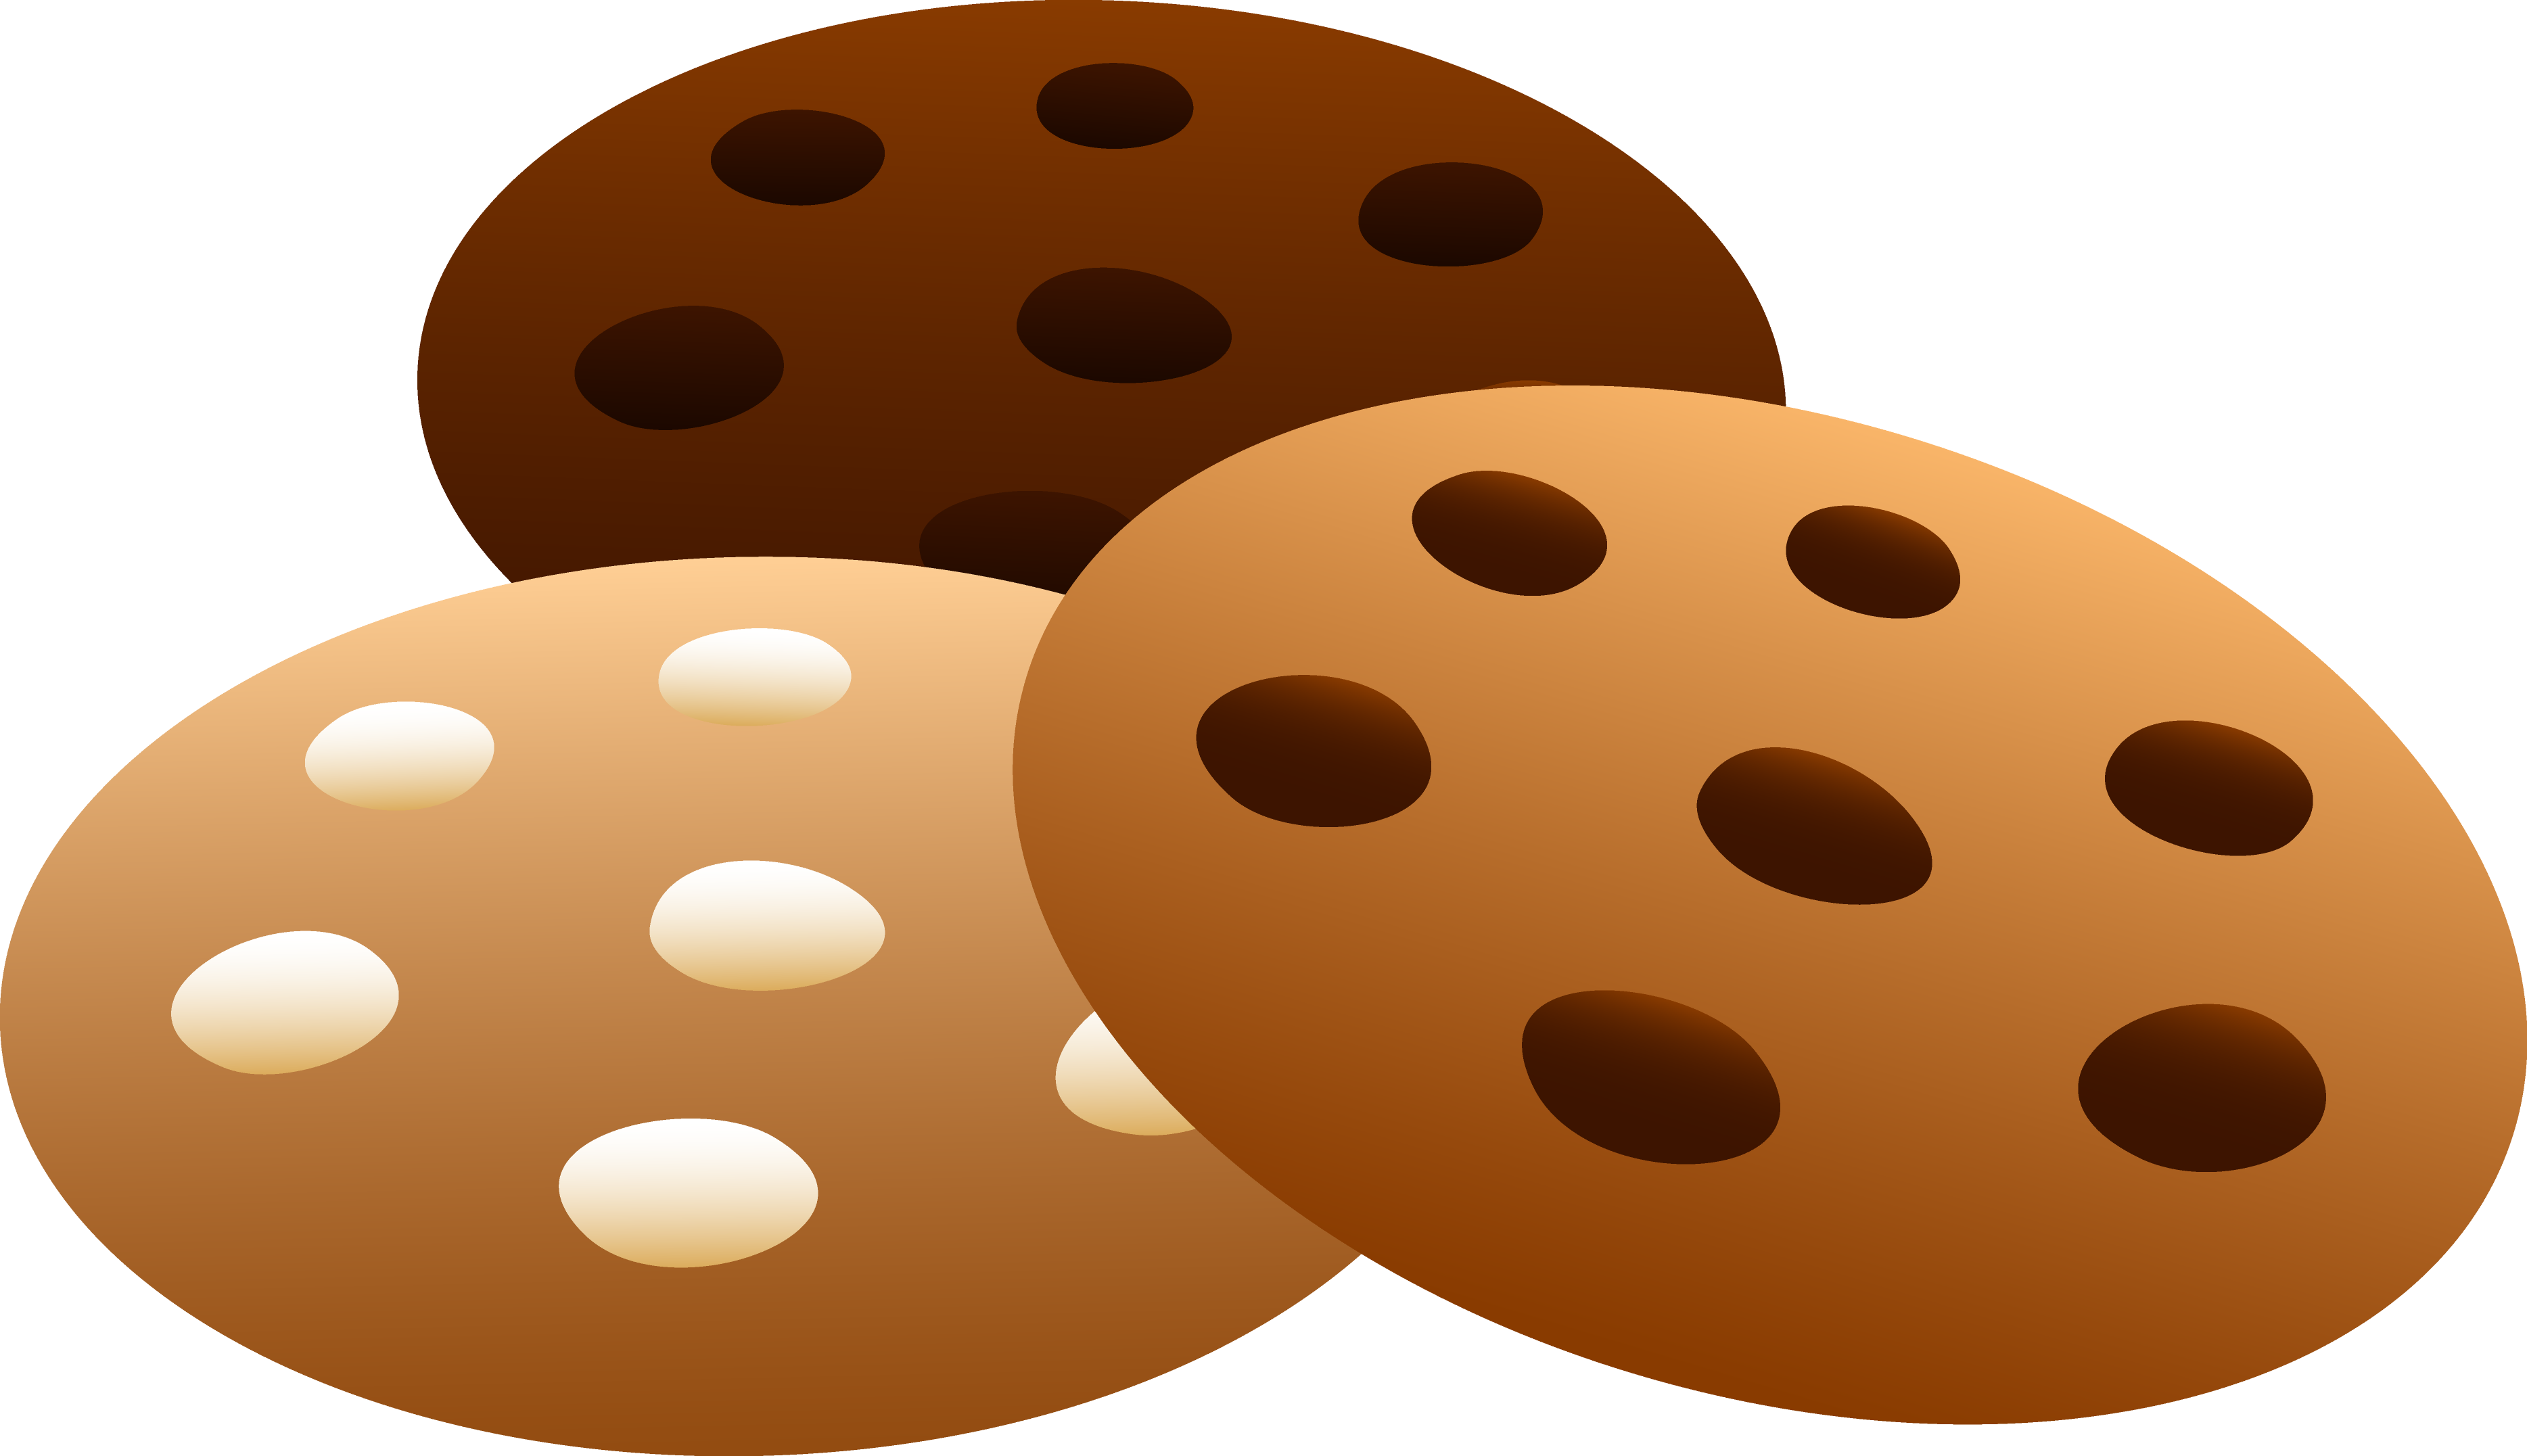 Chocolate Chip Cookies vector